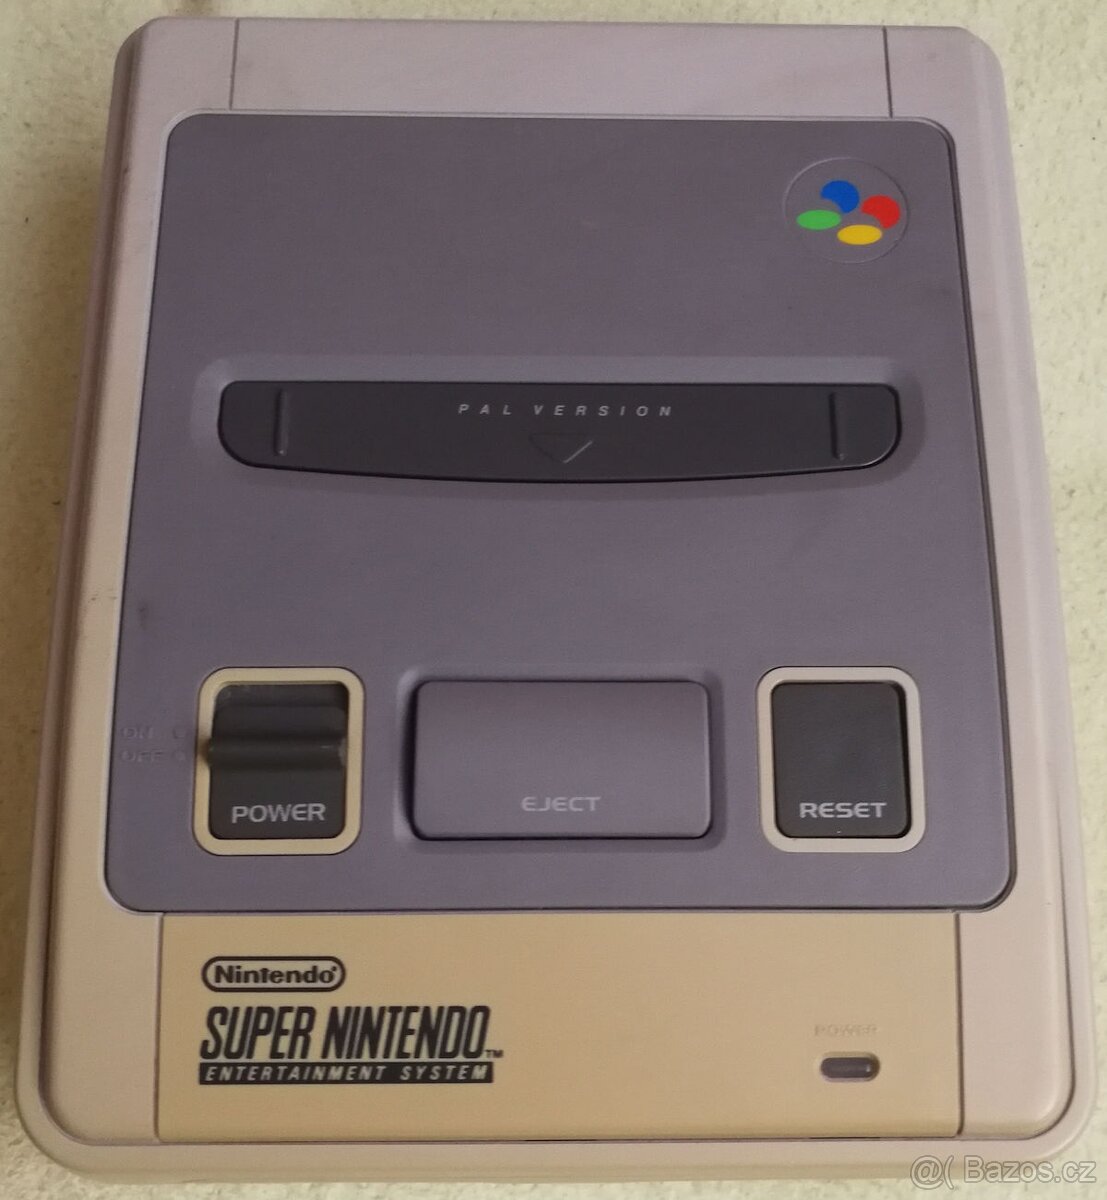 Super Nintendo Entertainment System-Nintendo SNES.